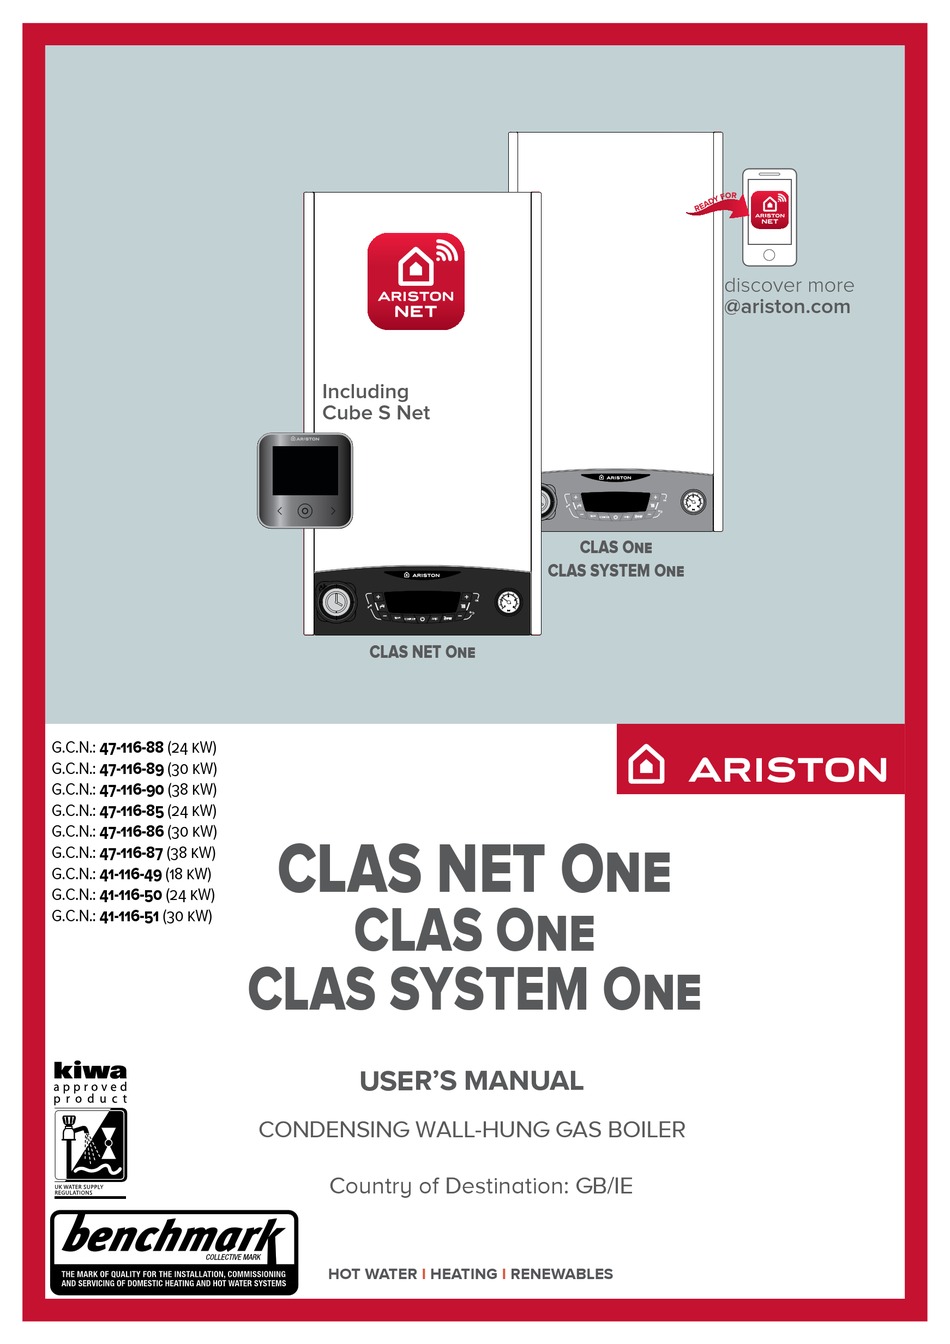 Ariston com. Ariston Clas b one. Мост Аристон мост Аристон. Dowland manual Clas 1. GC-a24hr1 user manual.